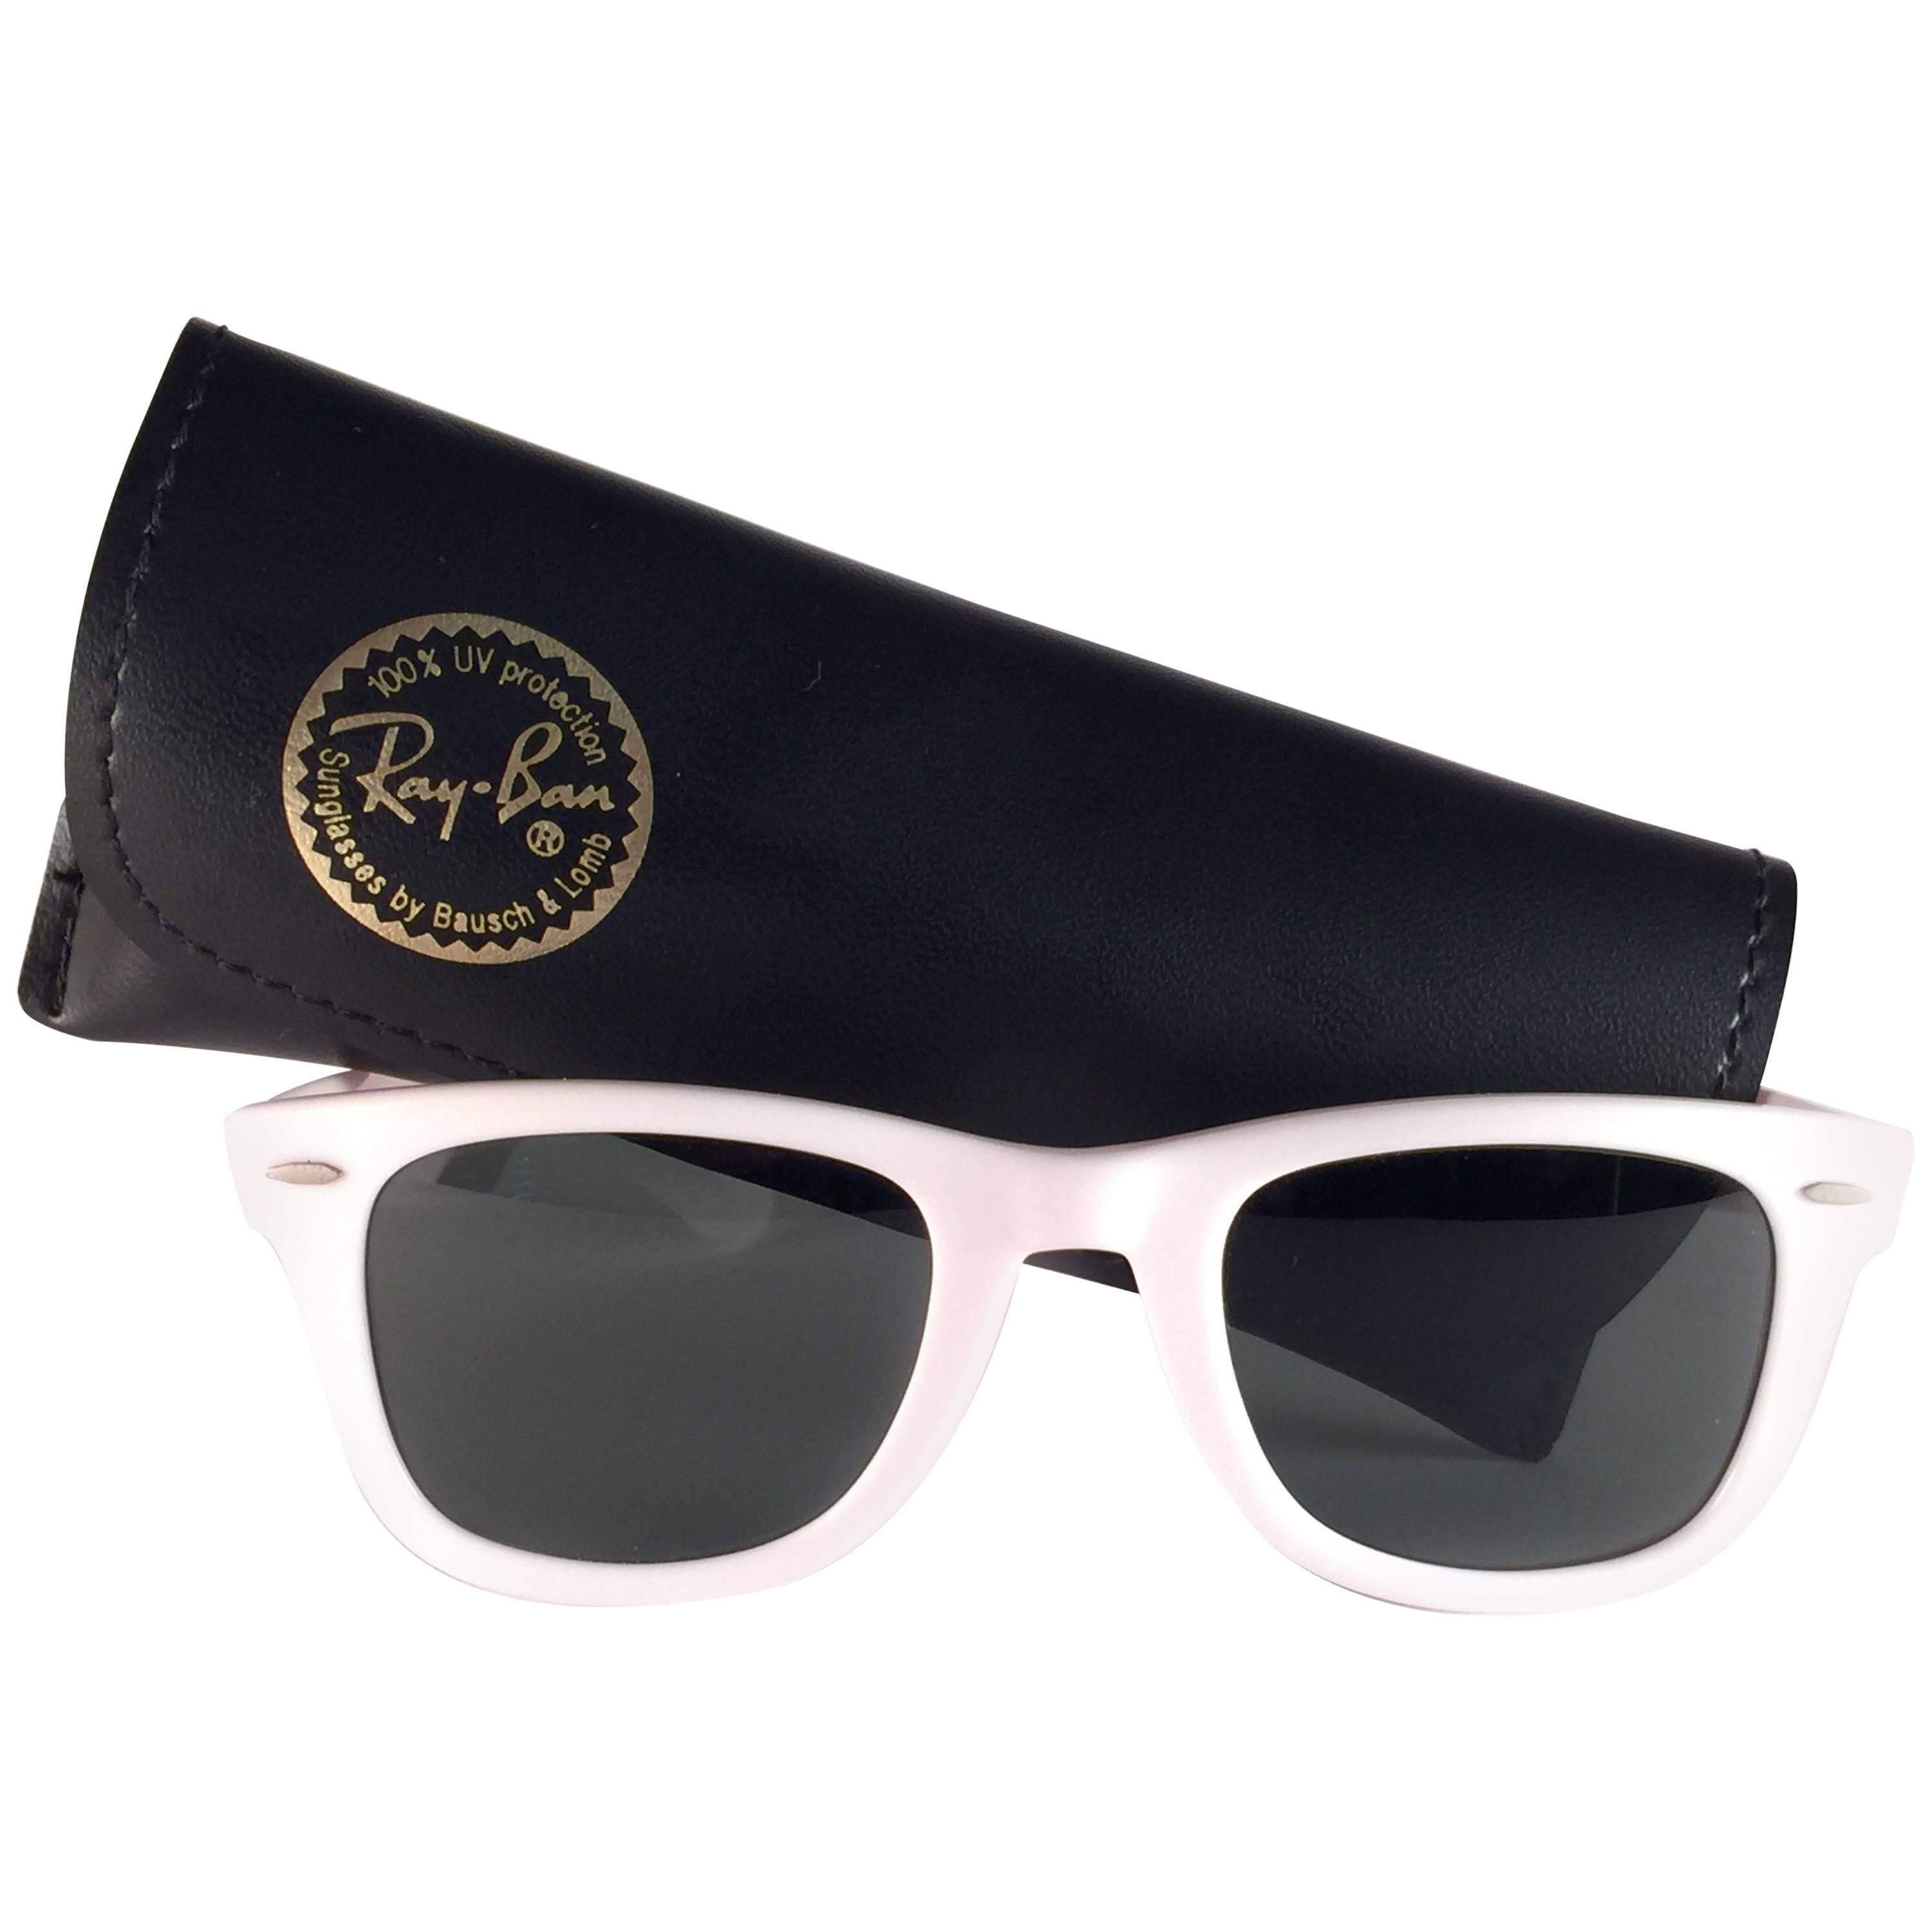 New Ray Ban The Wayfarer White 5024 B&L G15 Grey Lenses USA 80's Sunglasses